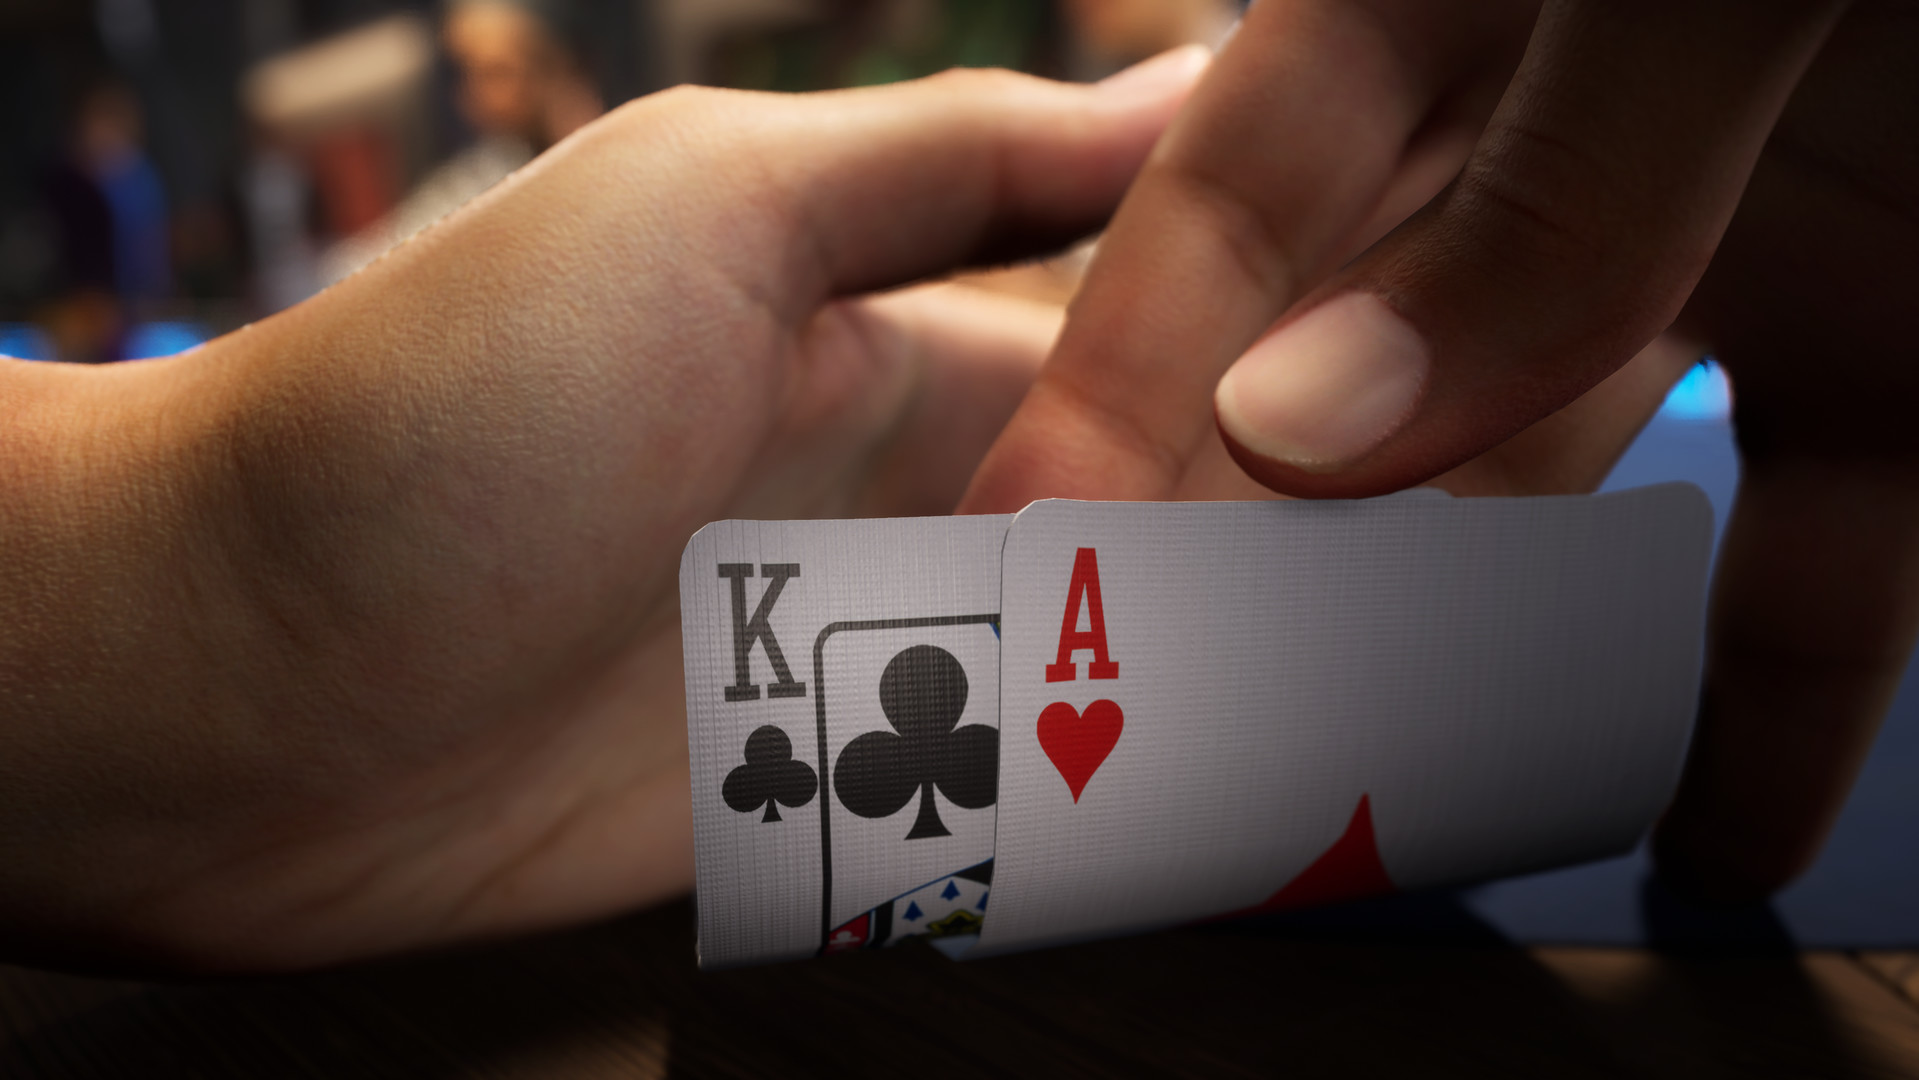 Poker Club karty as